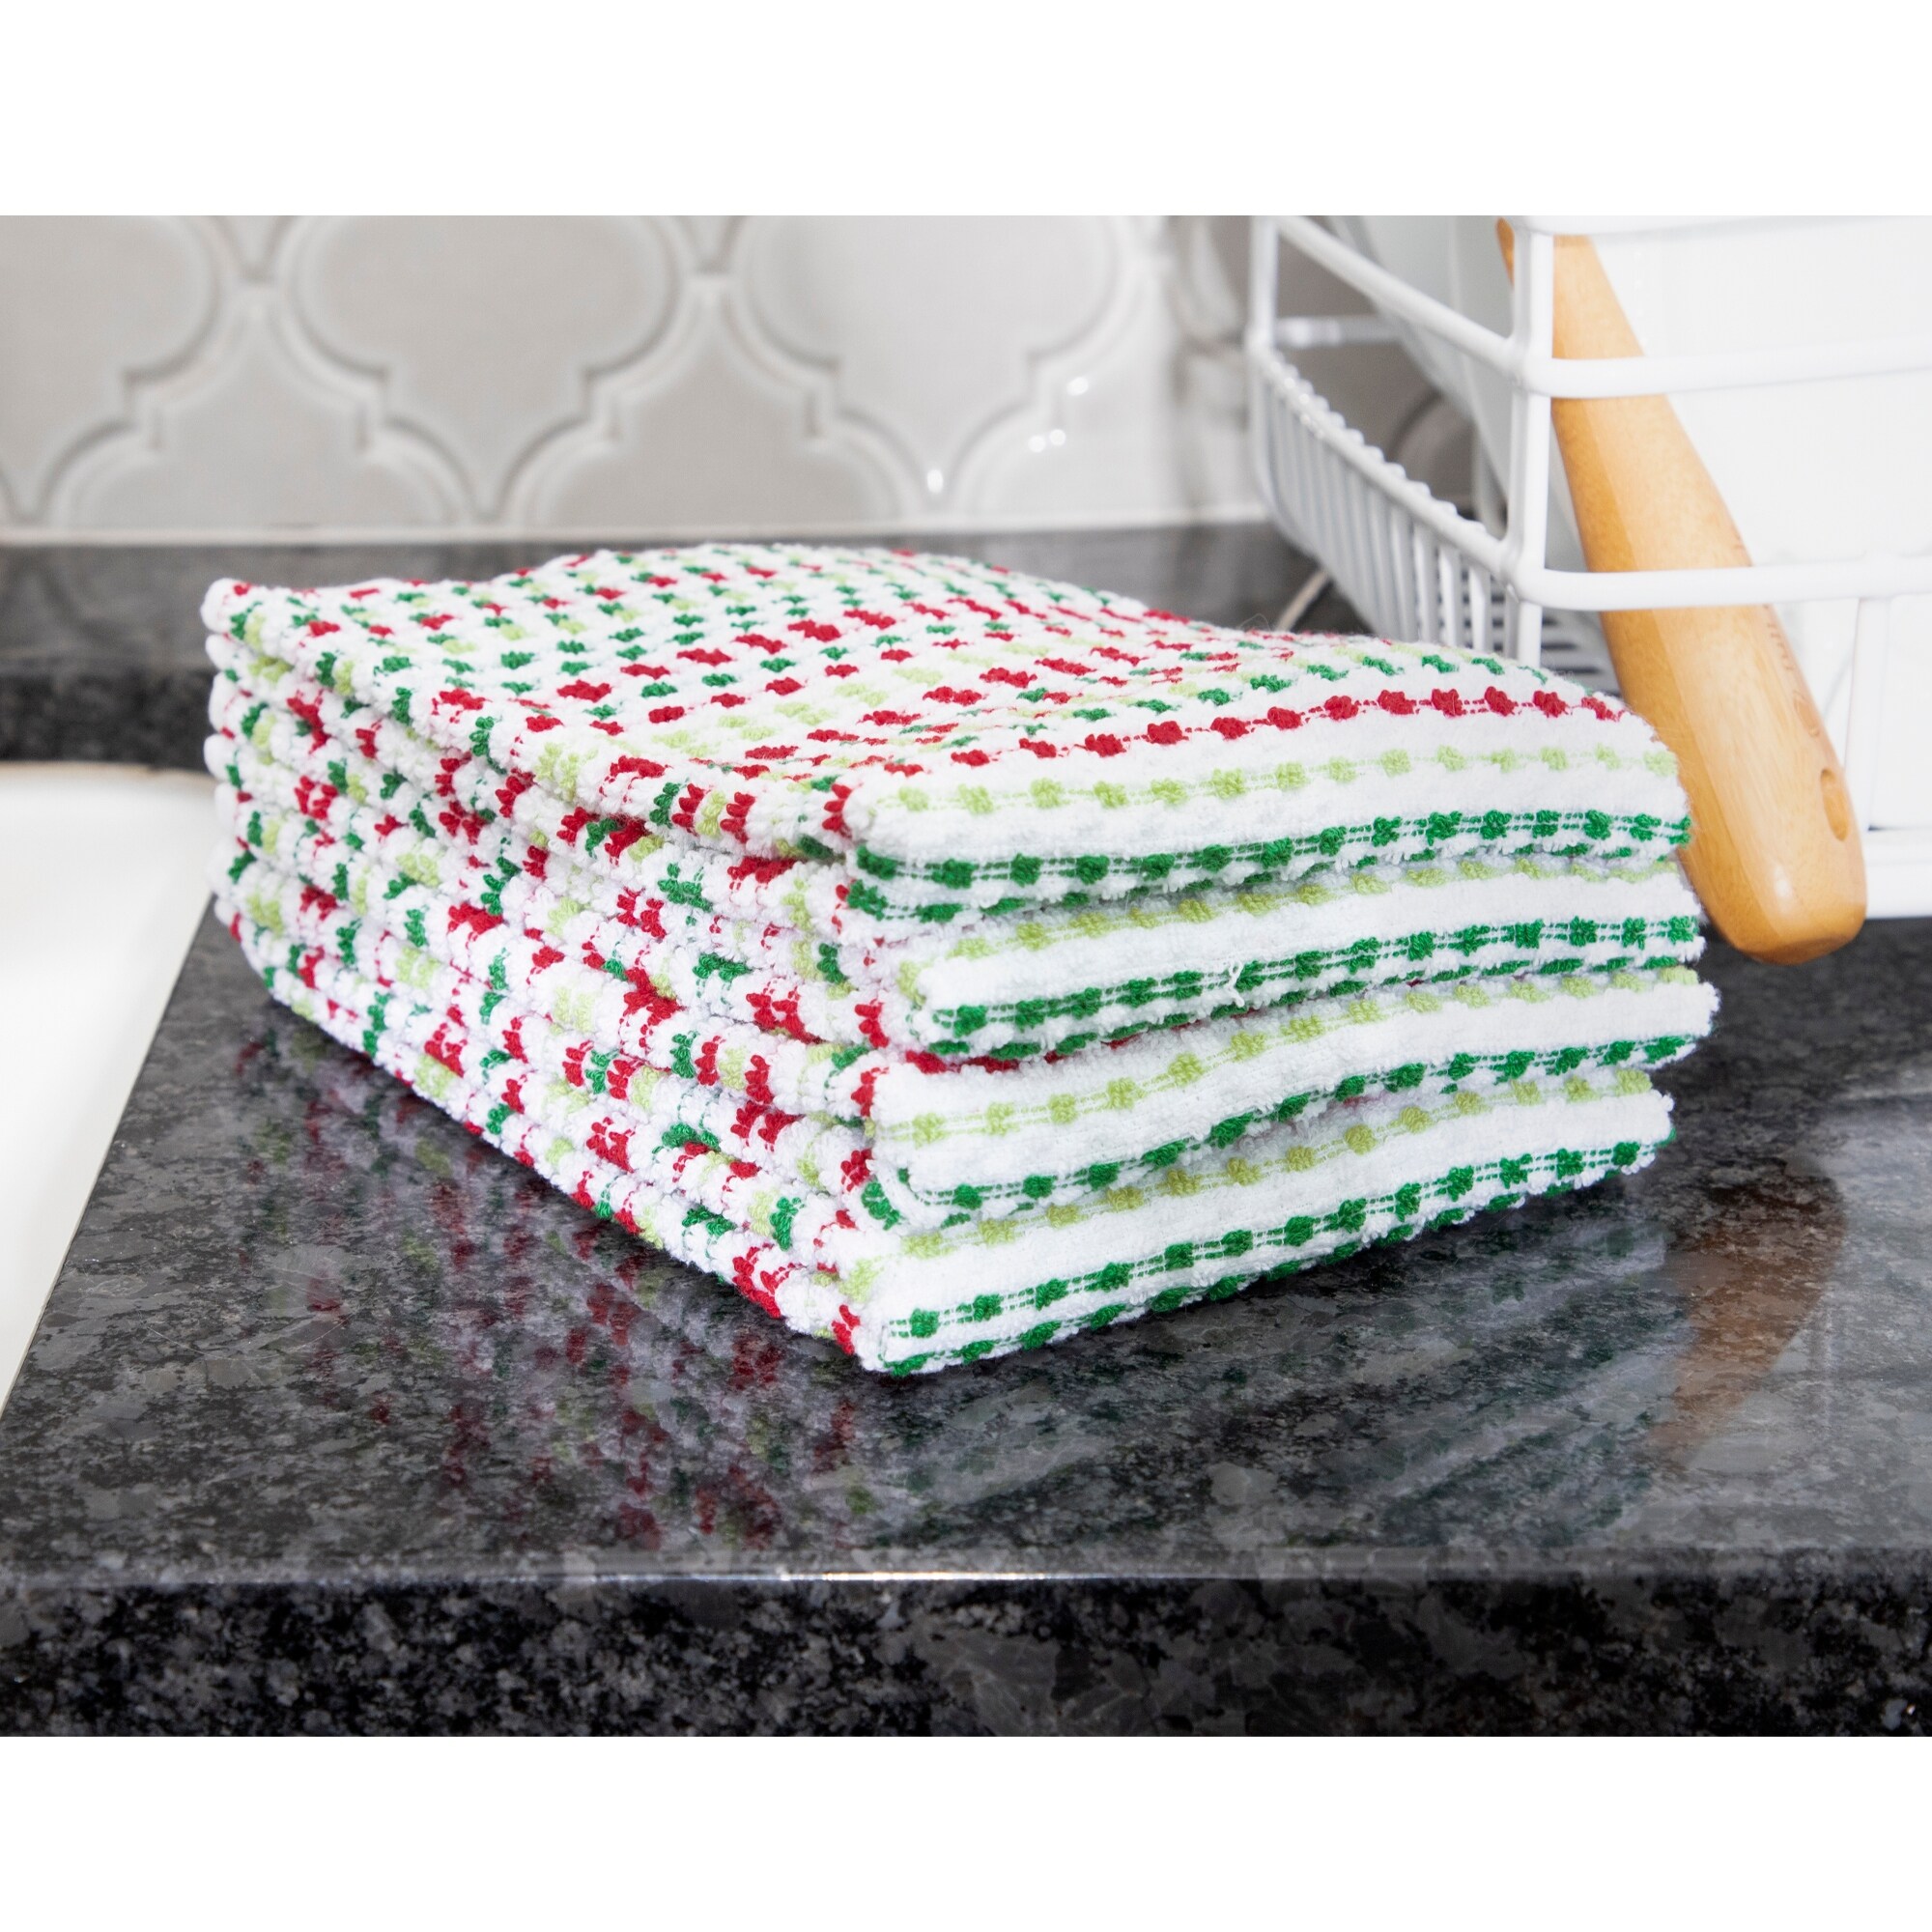 Ritz Pebble Cotton Terry Bar Mop Kitchen Towel (4-Piece)Fall